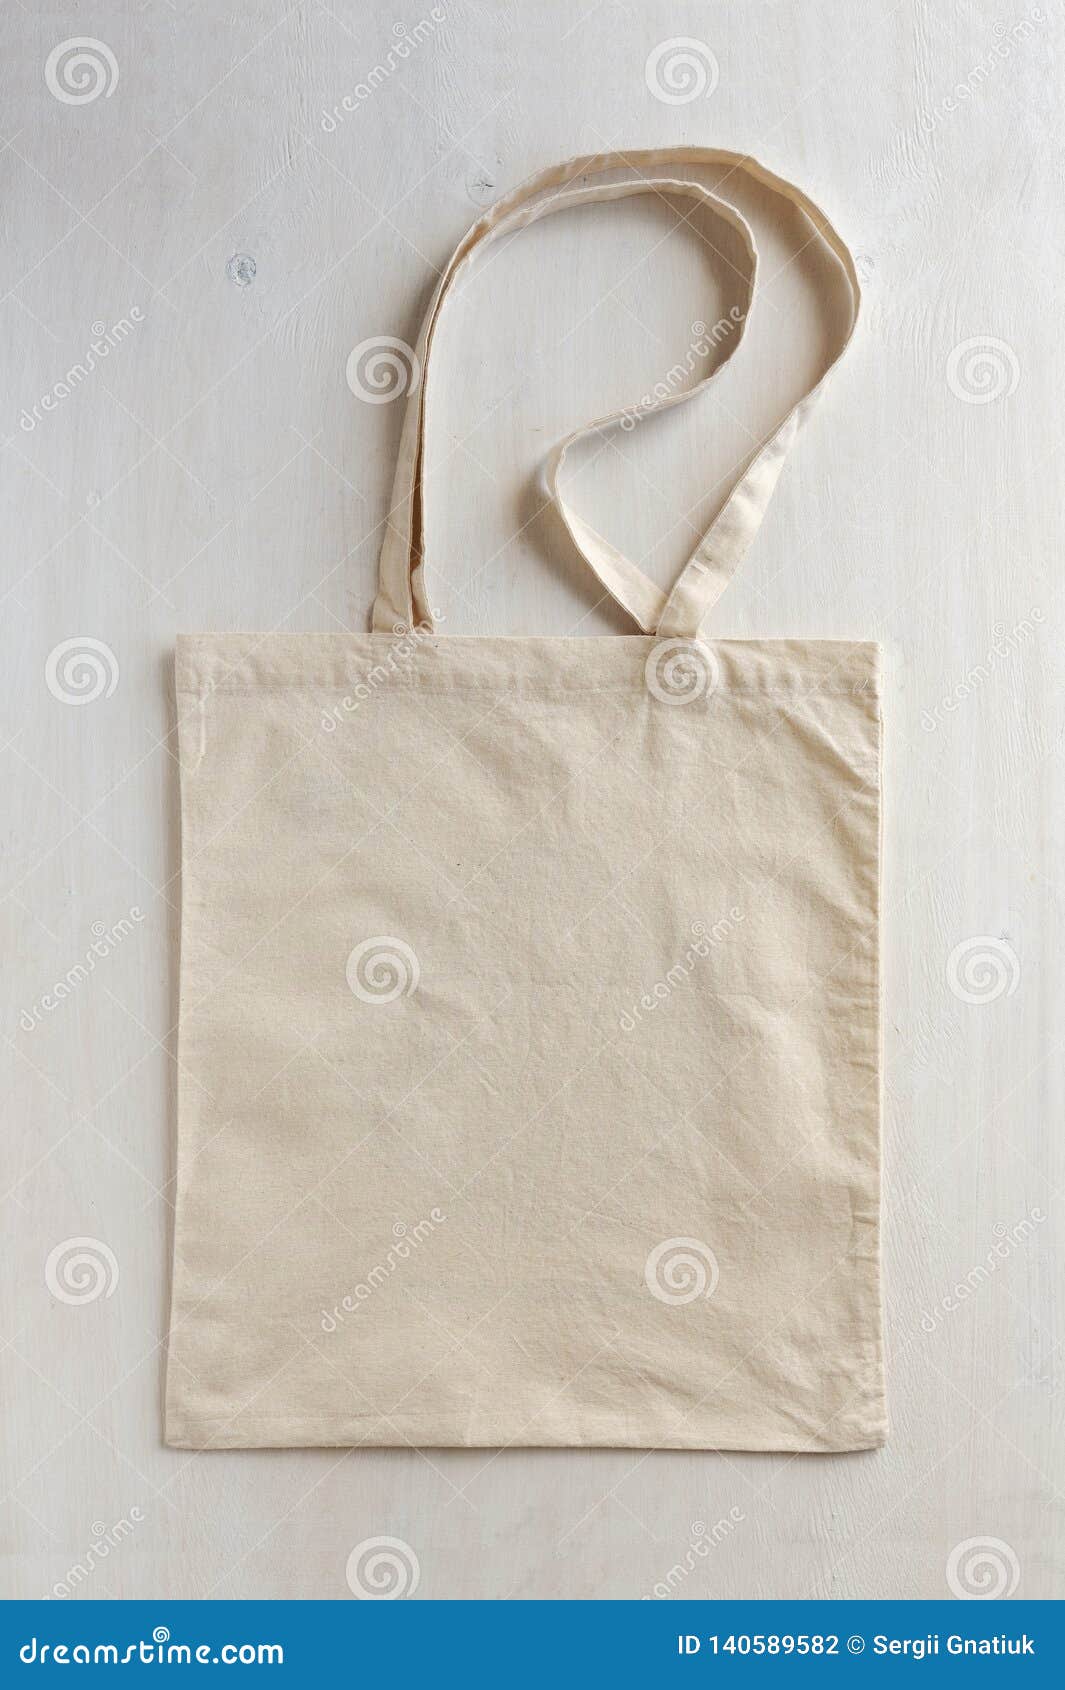 natural fiber neutral re-usable shopping bag